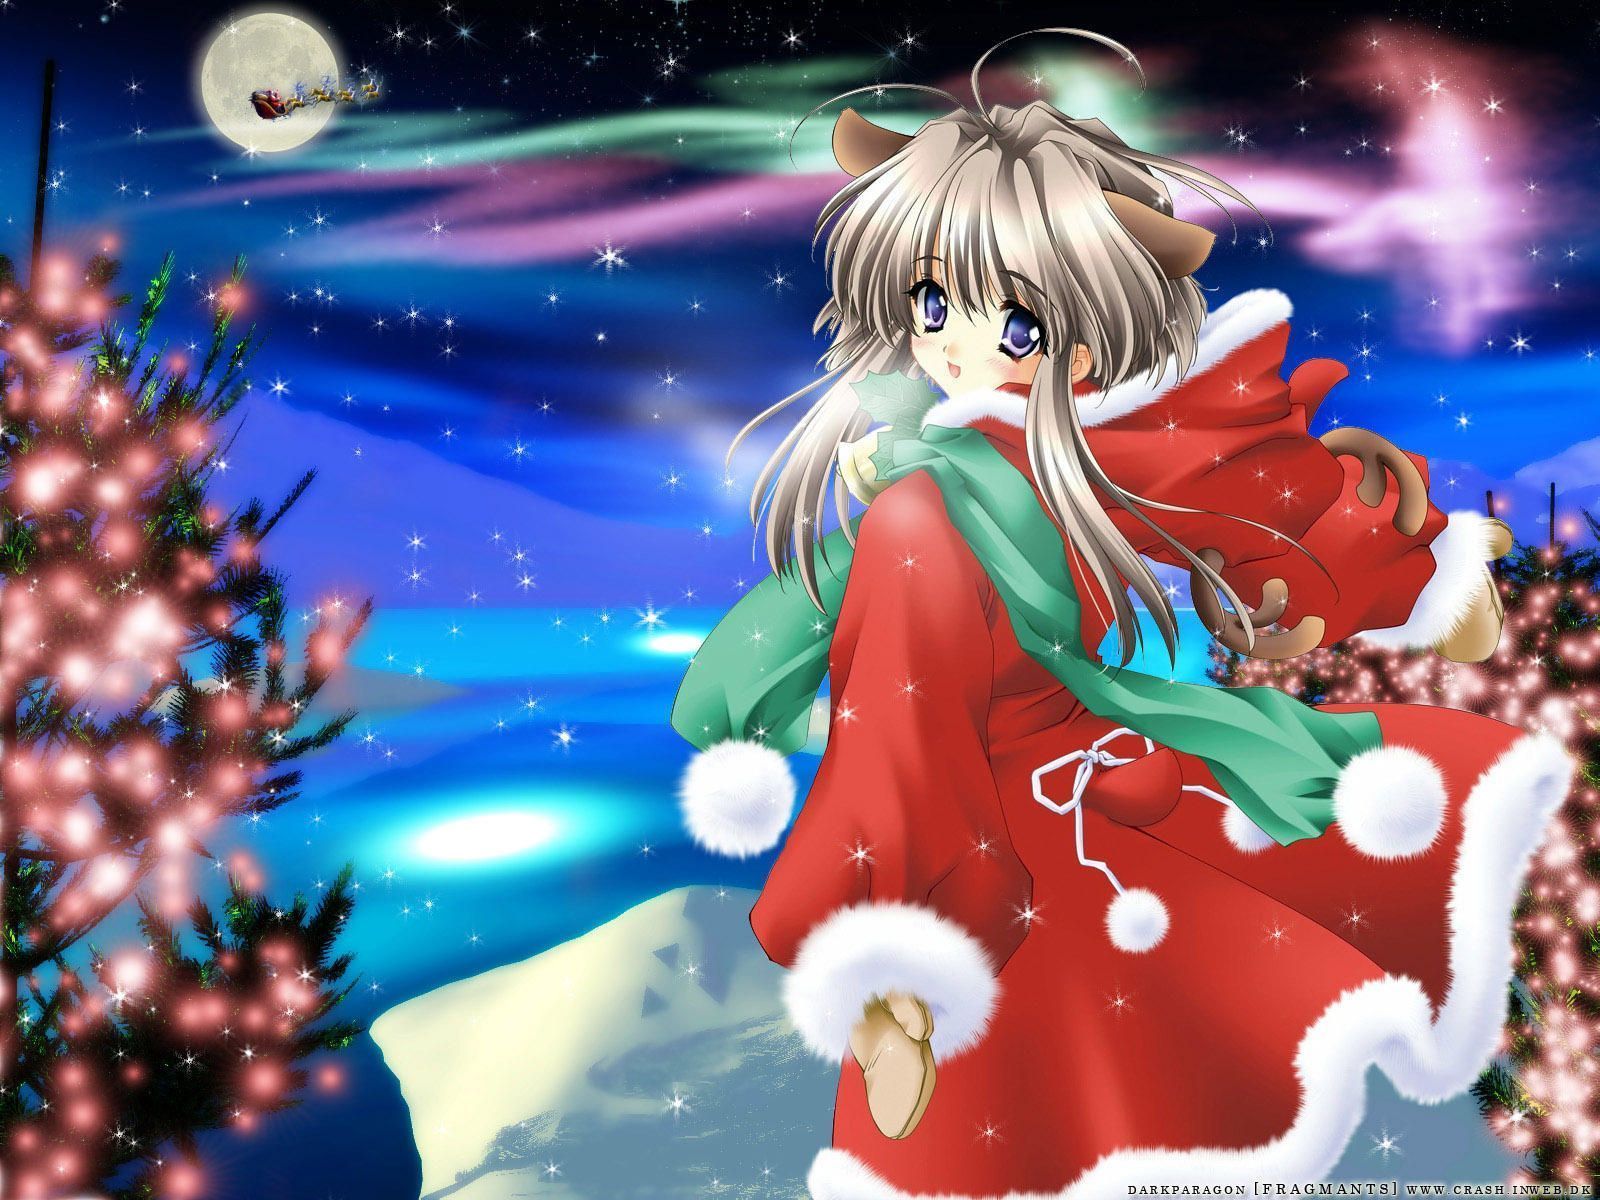 Cute Anime Girl Christmas wallpaper HD. Wallpaper, Background